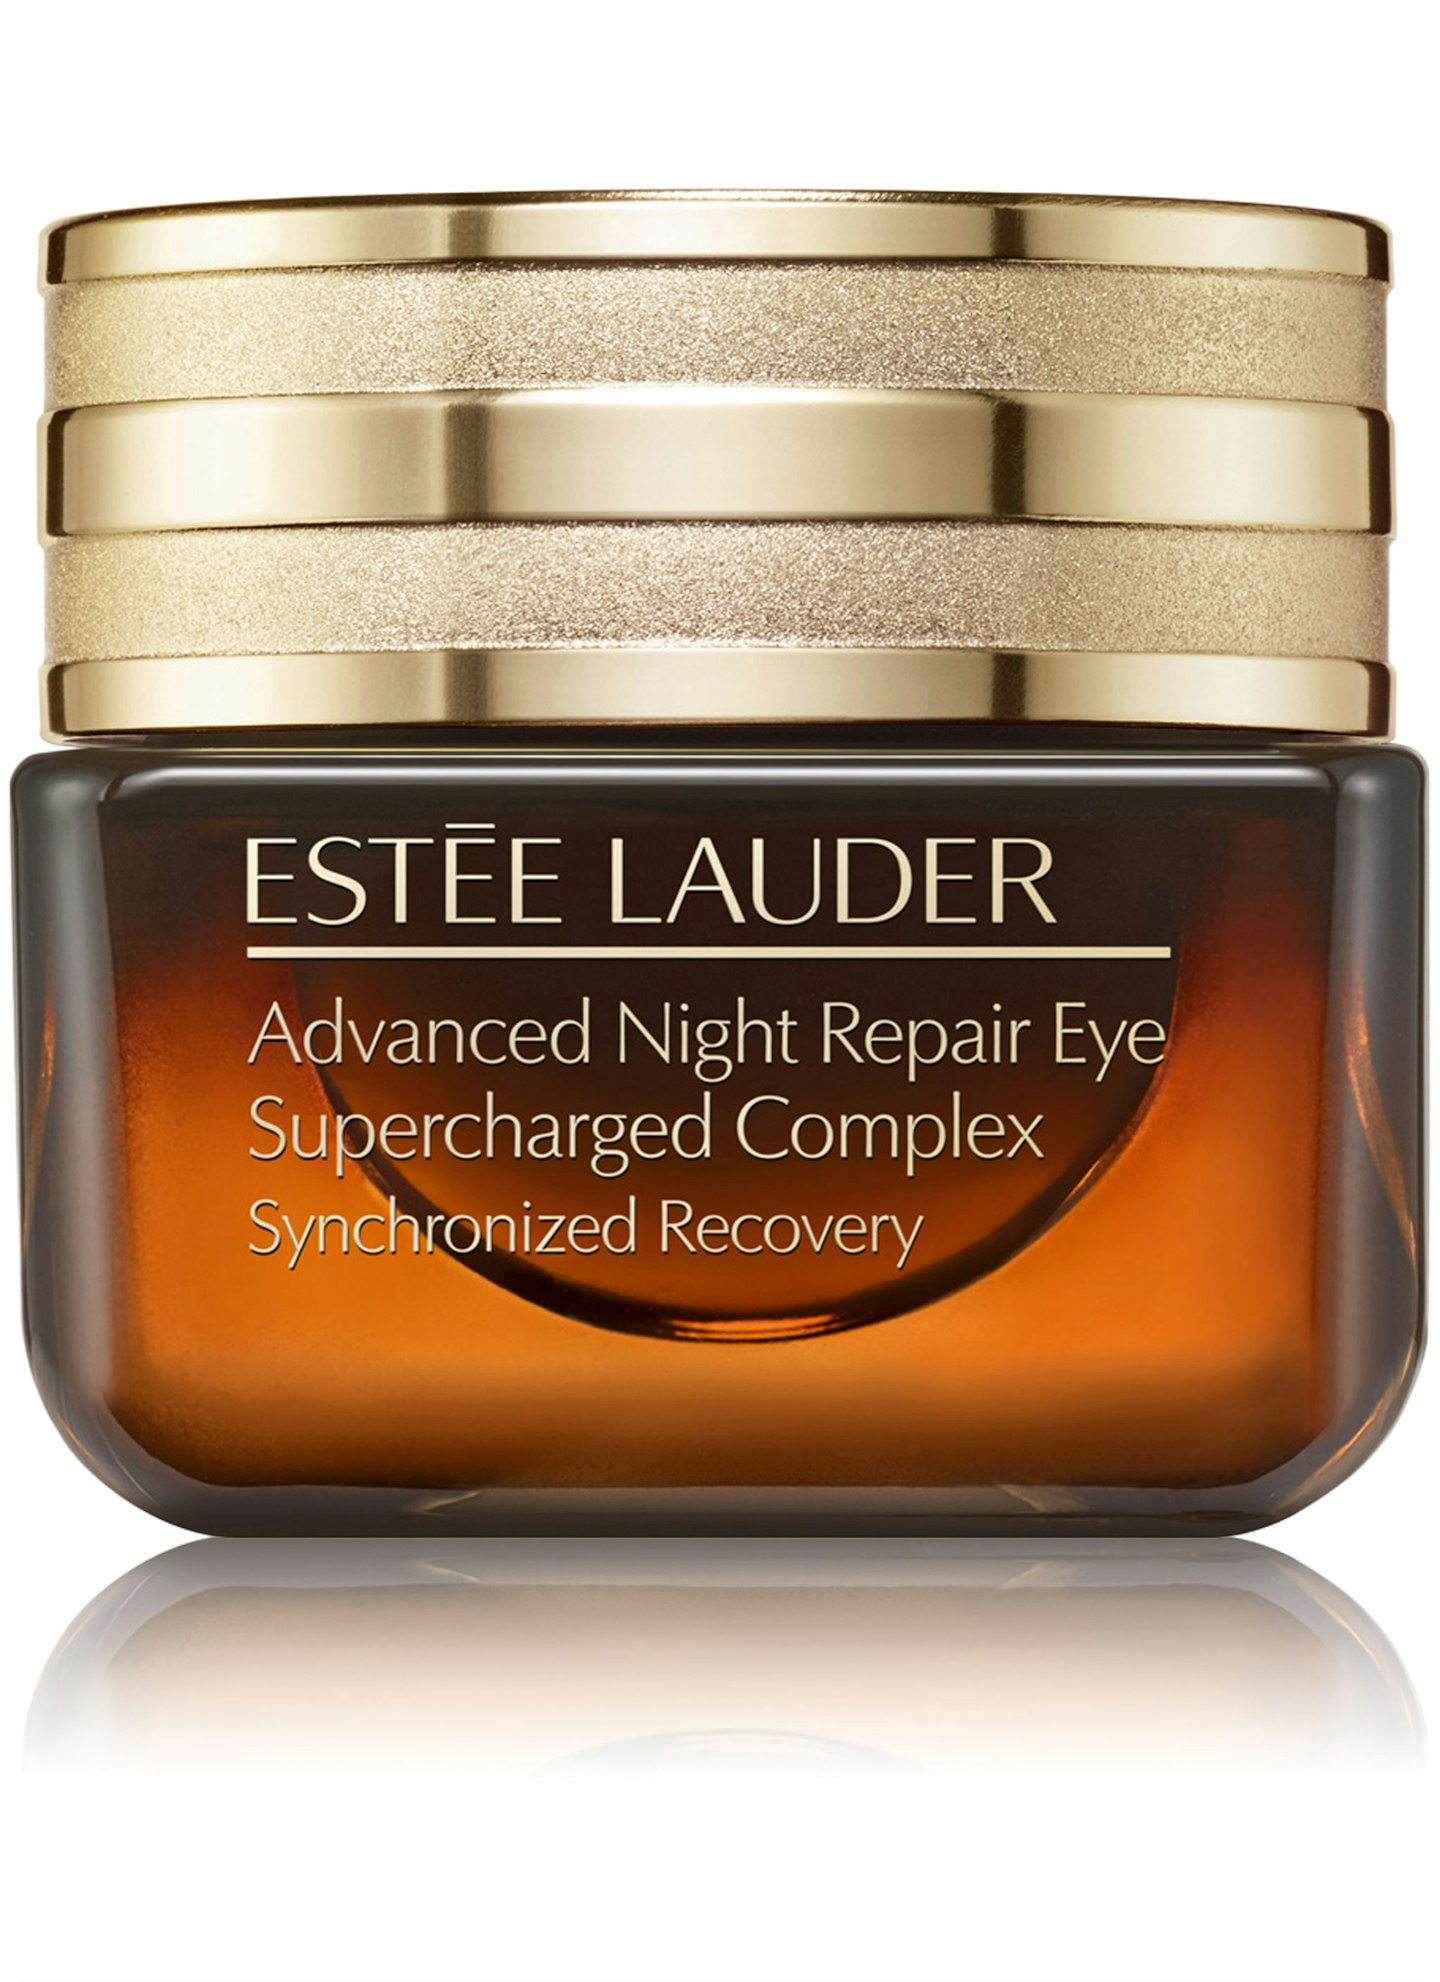 Estu00e9e Lauder Advanced Night Repair Eye Supercharged Complex Synchronized Recovery, £46